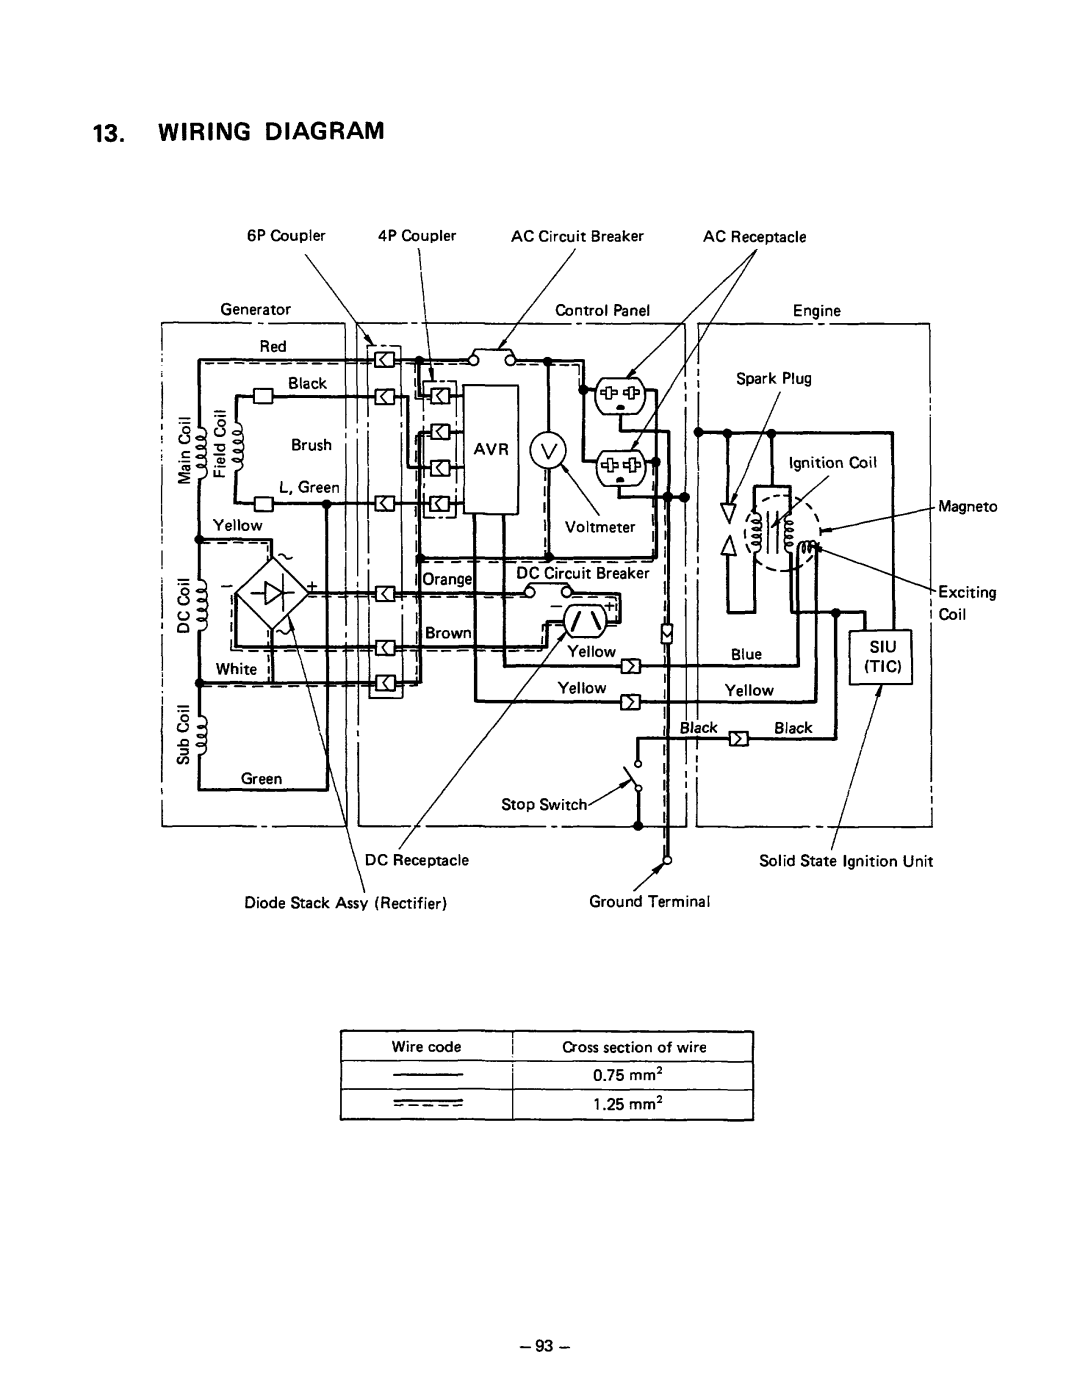 Subaru Robin Power Products R1200 service manual Wiring Diagram, i LT-TwI, I I il, Yellow 